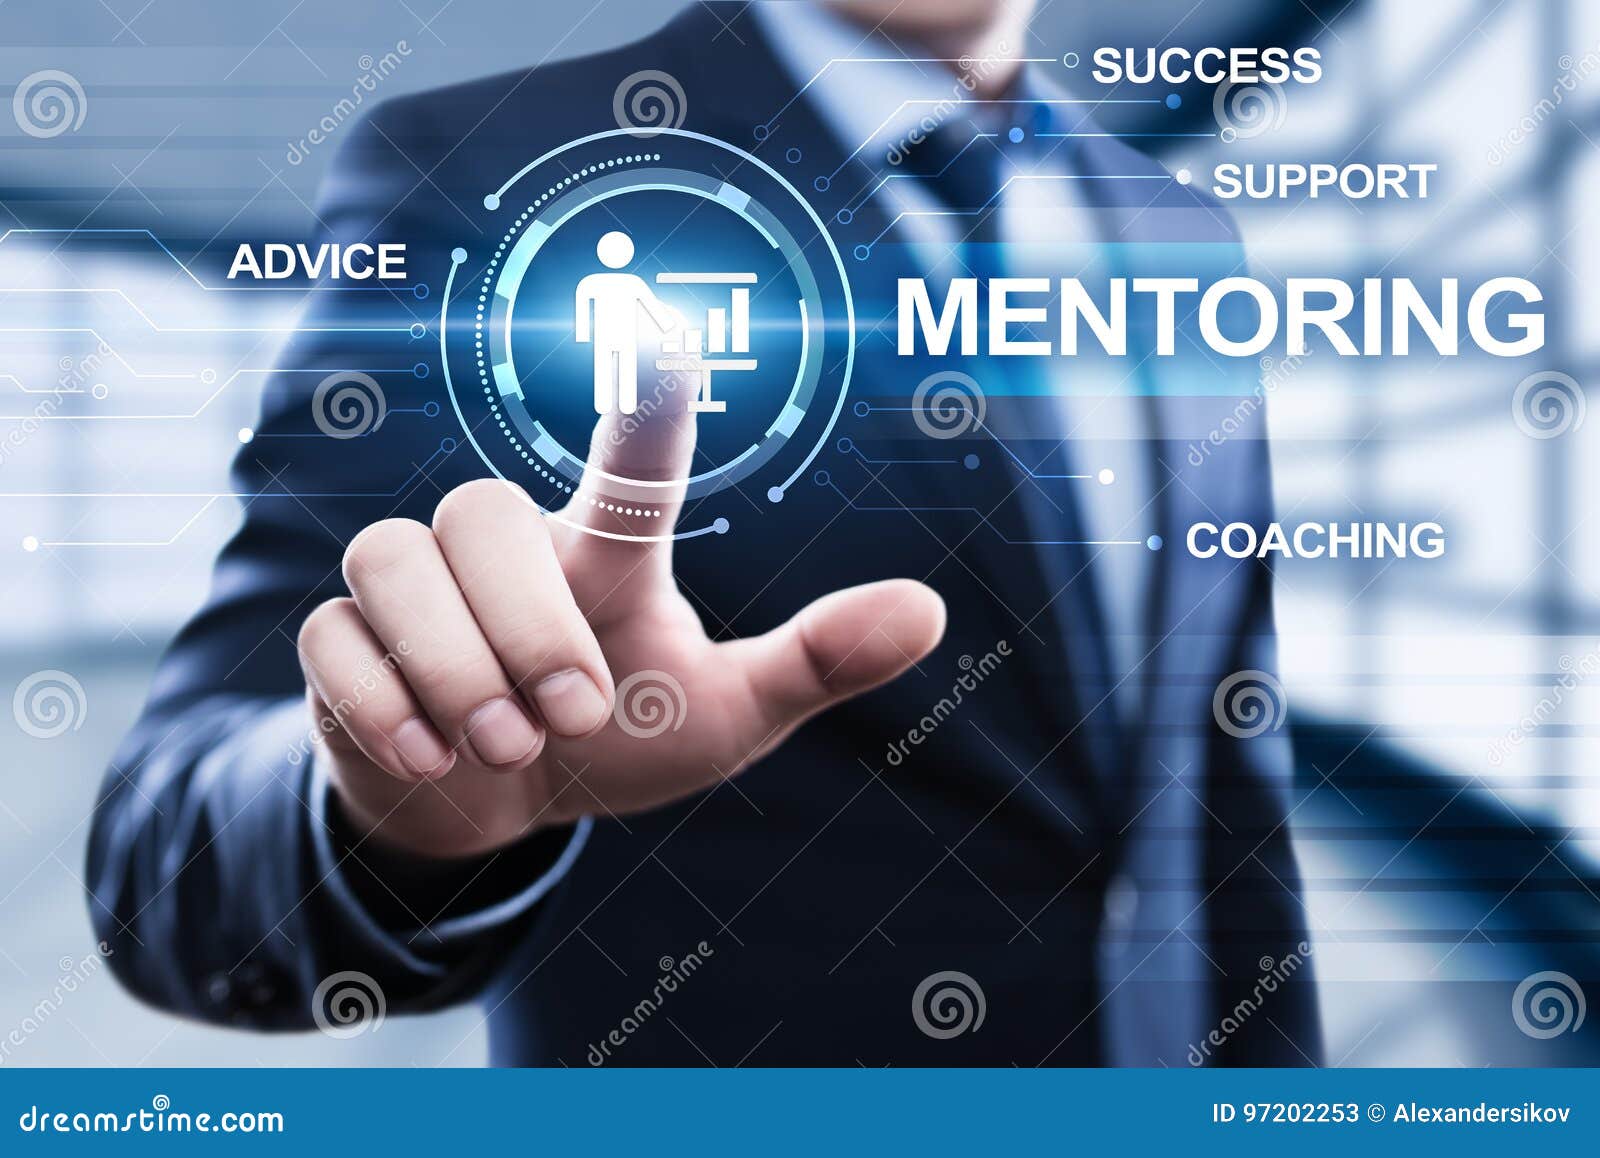 mentoring business motivation coaching success career concept